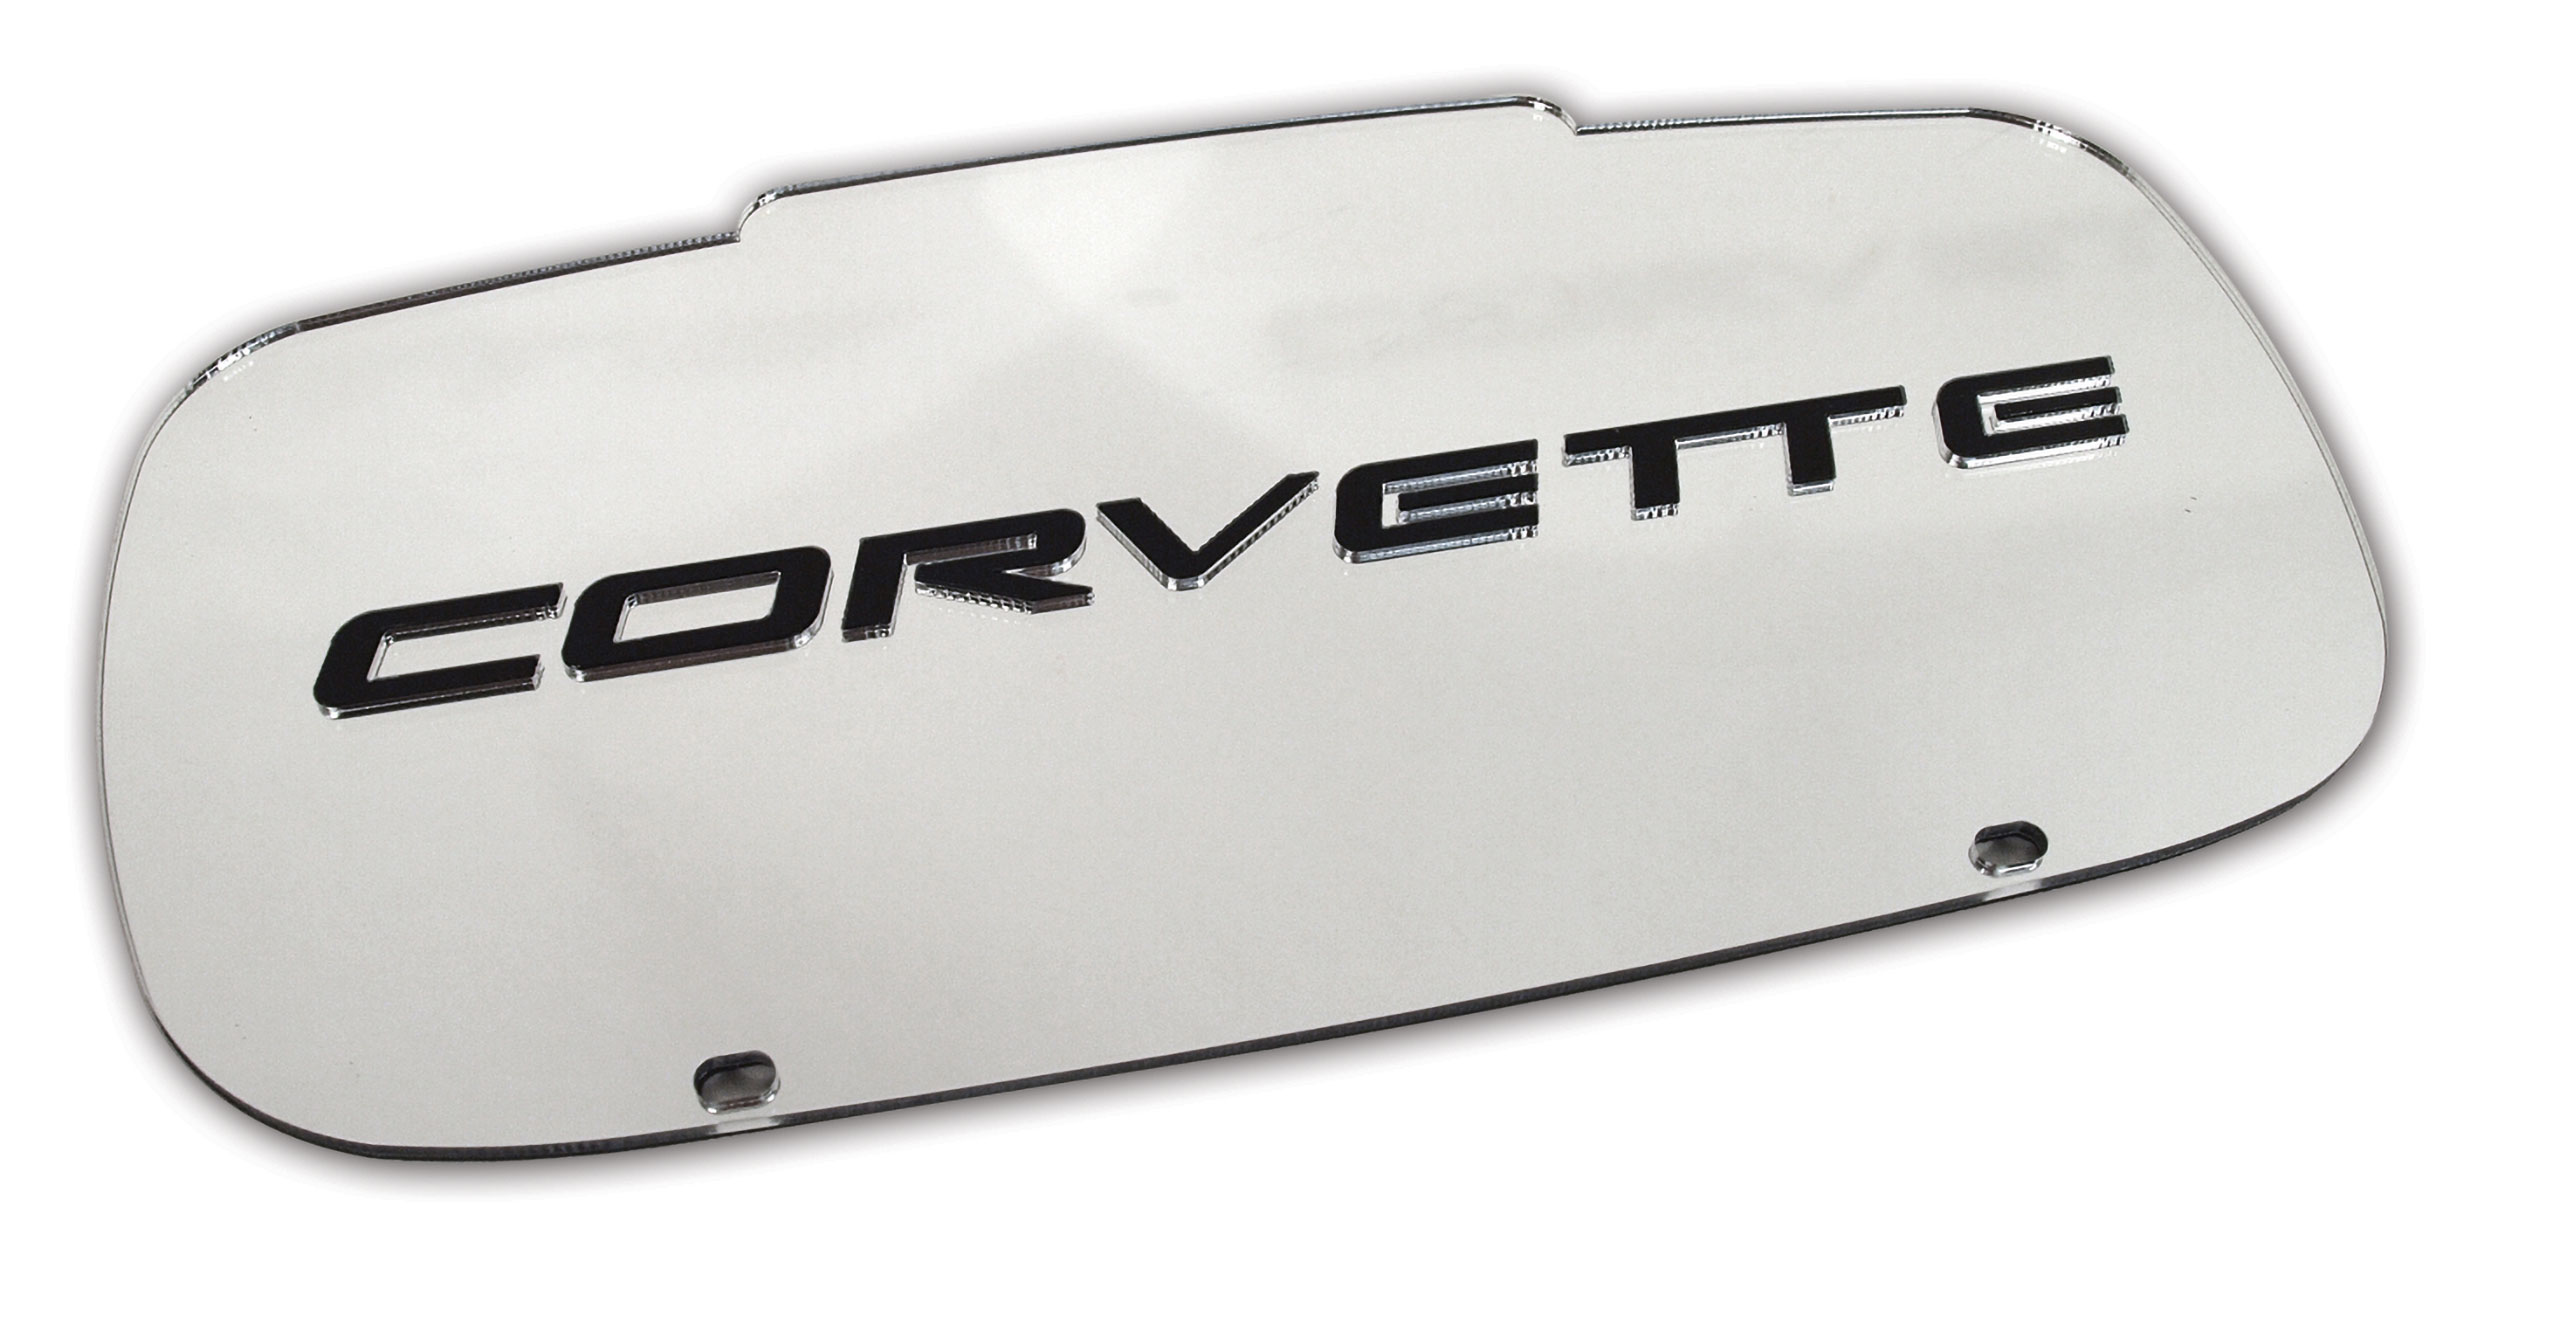 Front License Plate Contour Mirrored W/Black C5 Script For C5 Corvette